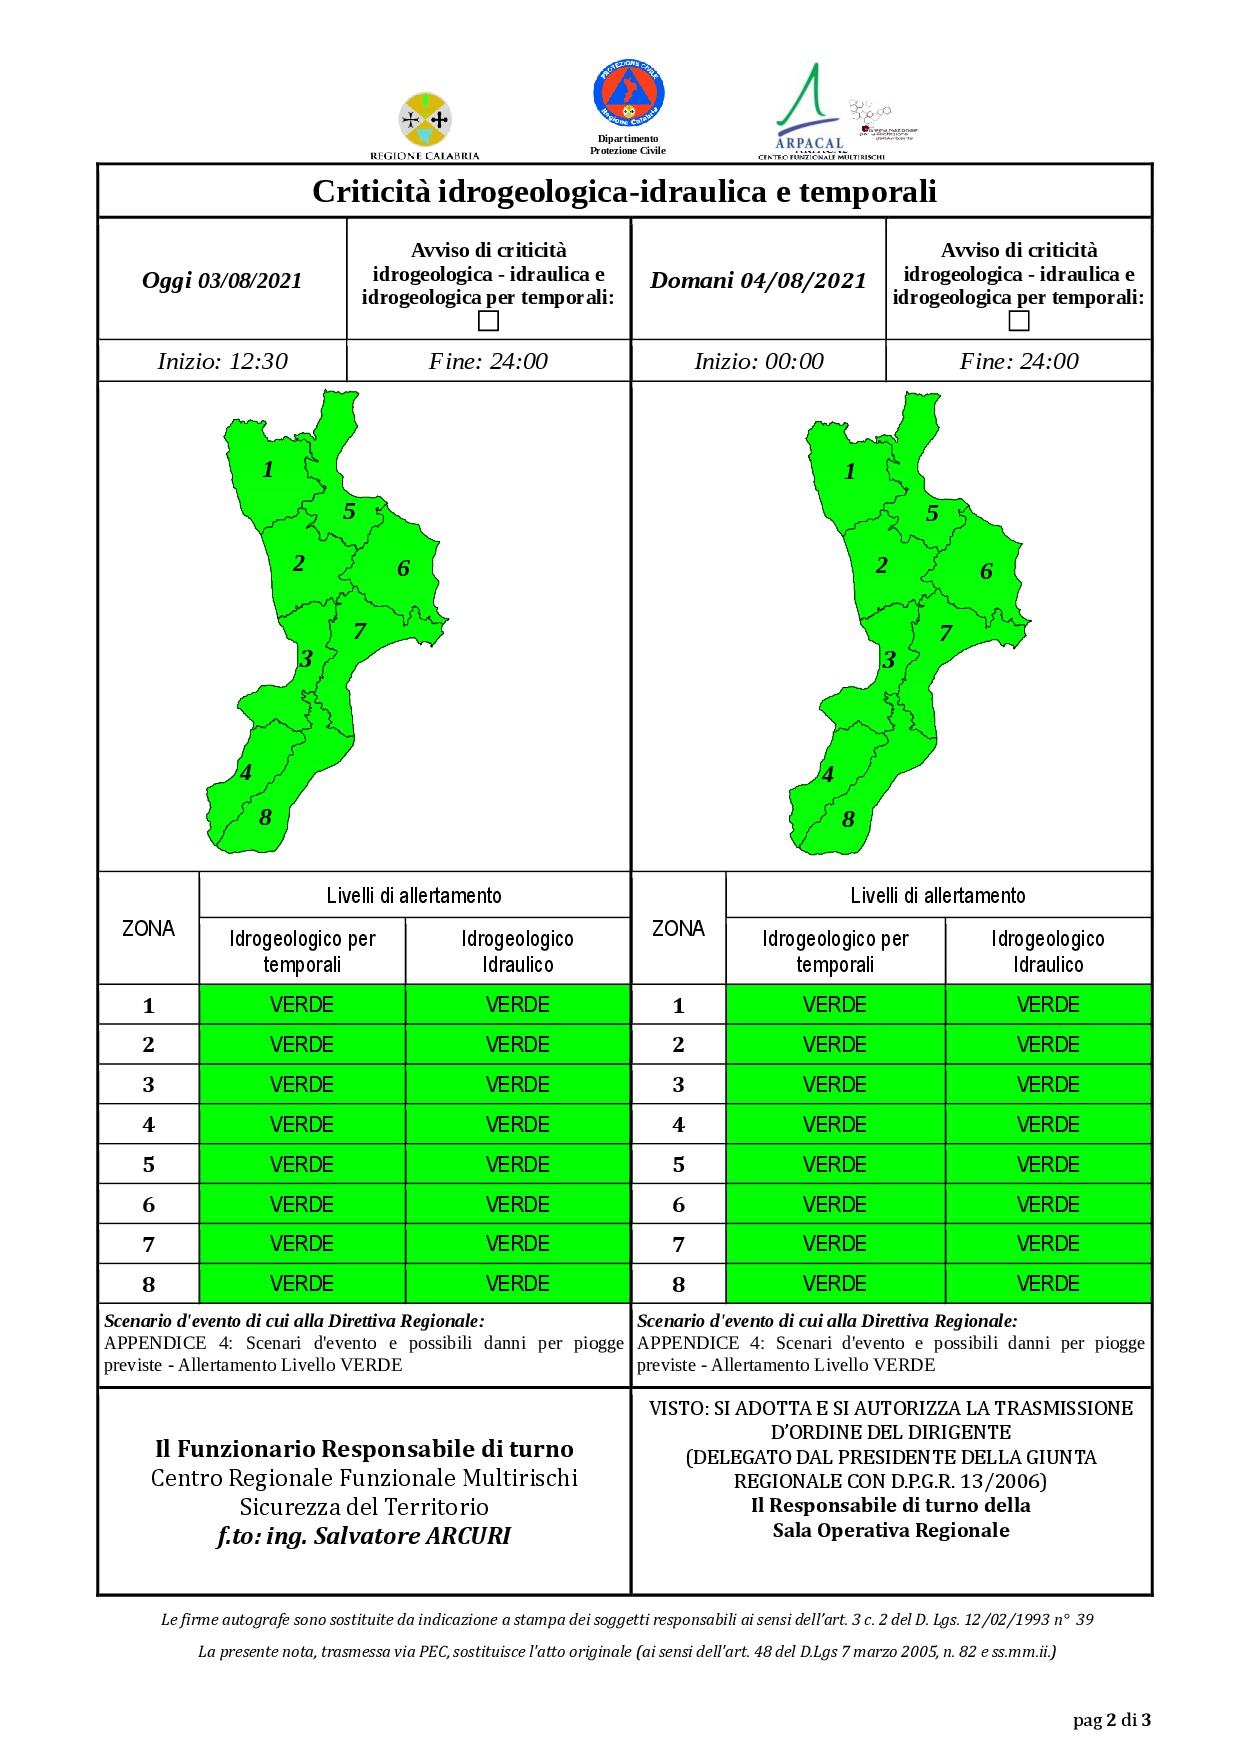 Criticità idrogeologica-idraulica e temporali in Calabria 03-08-2021